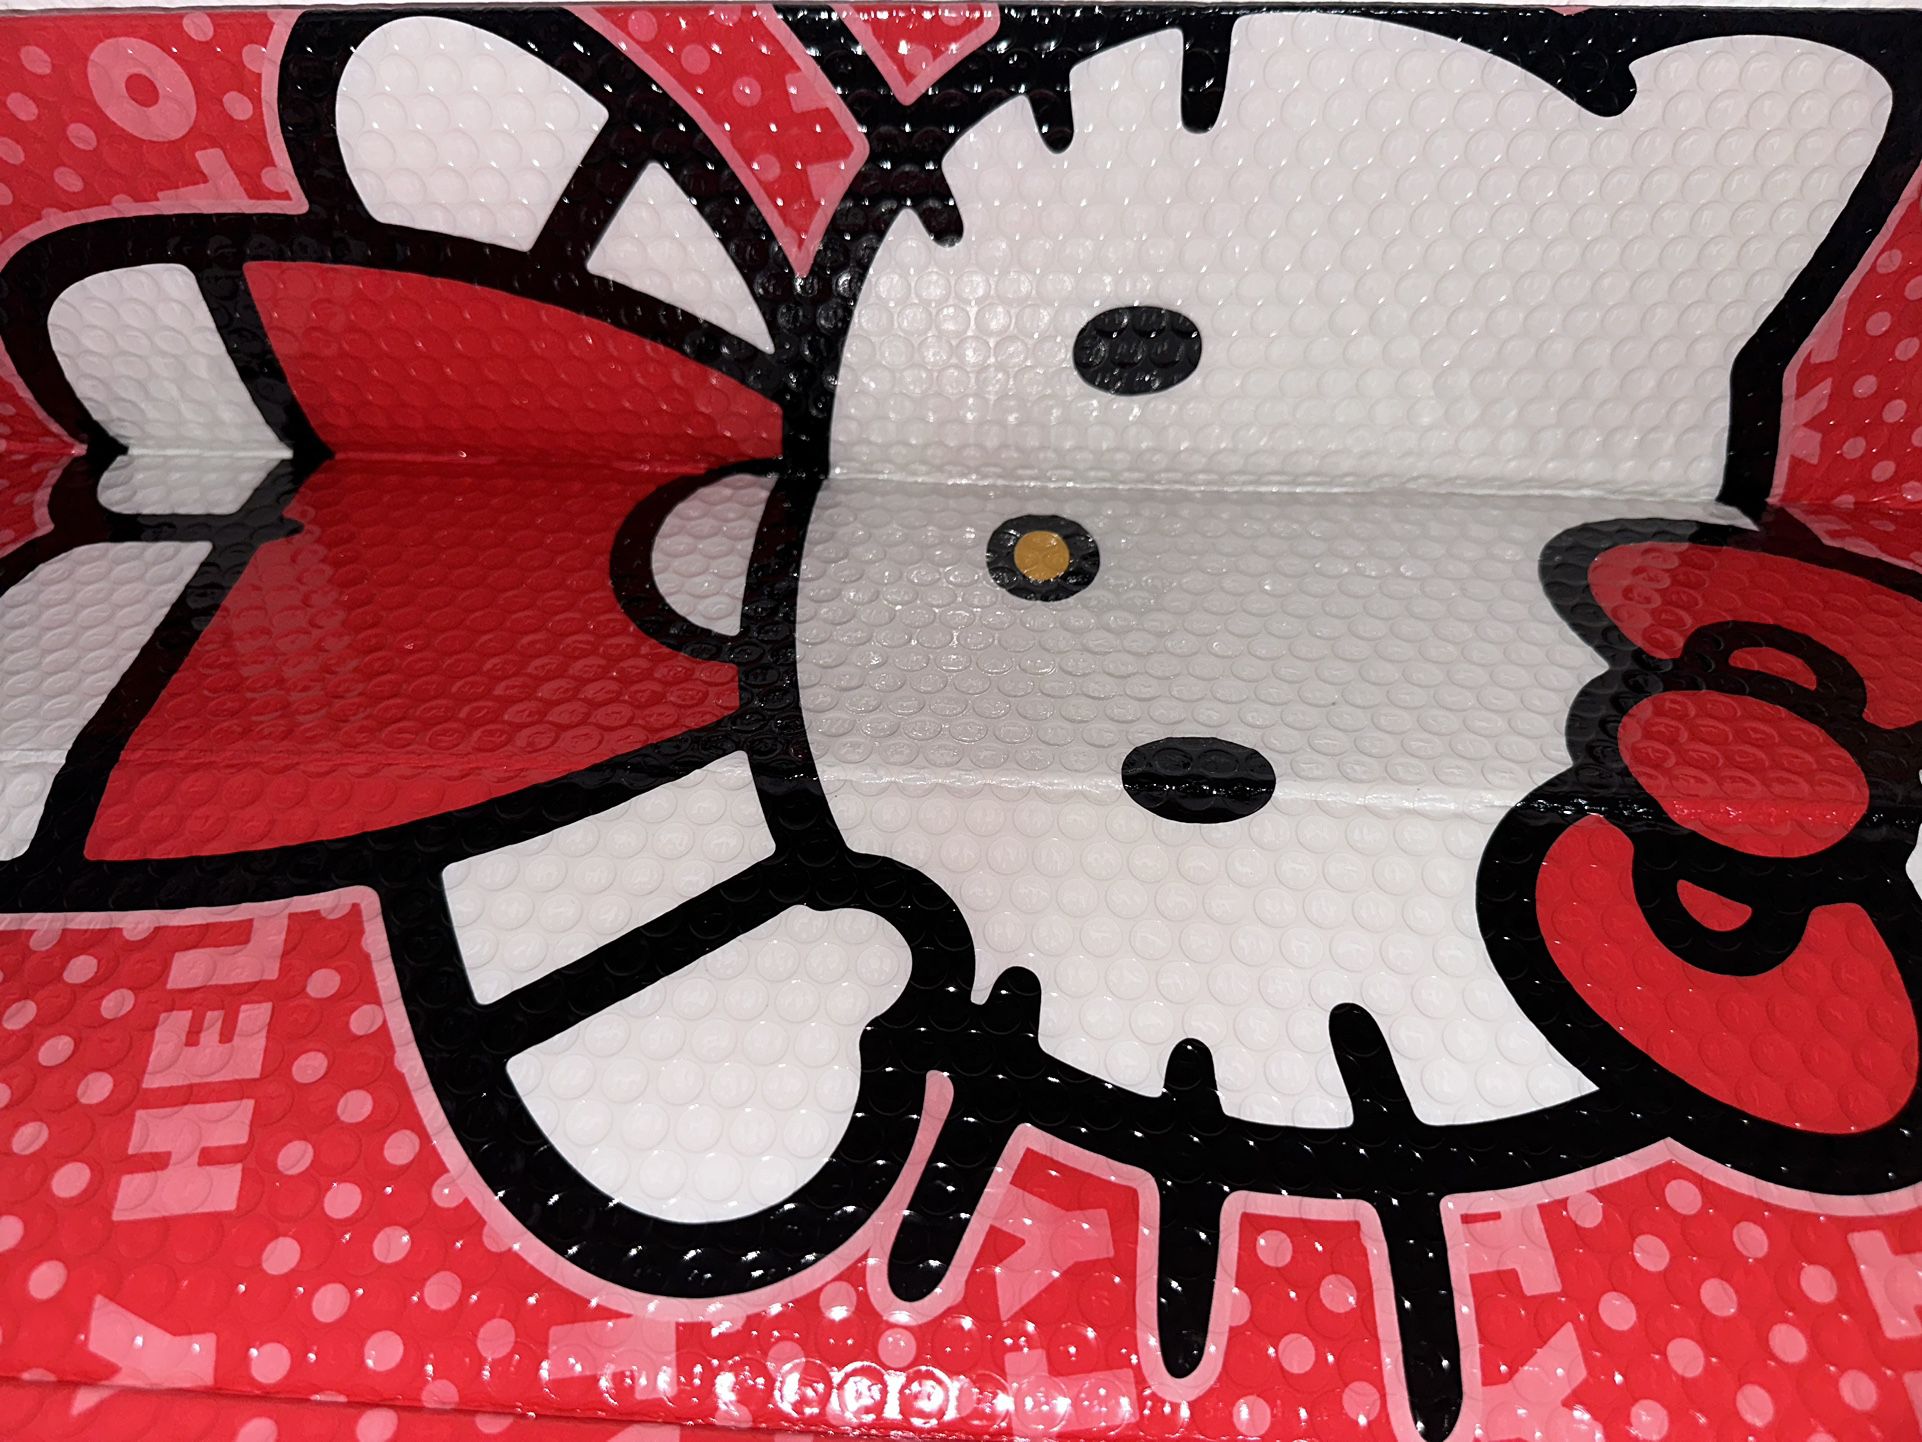 Hello Kitty Car Sunshade 